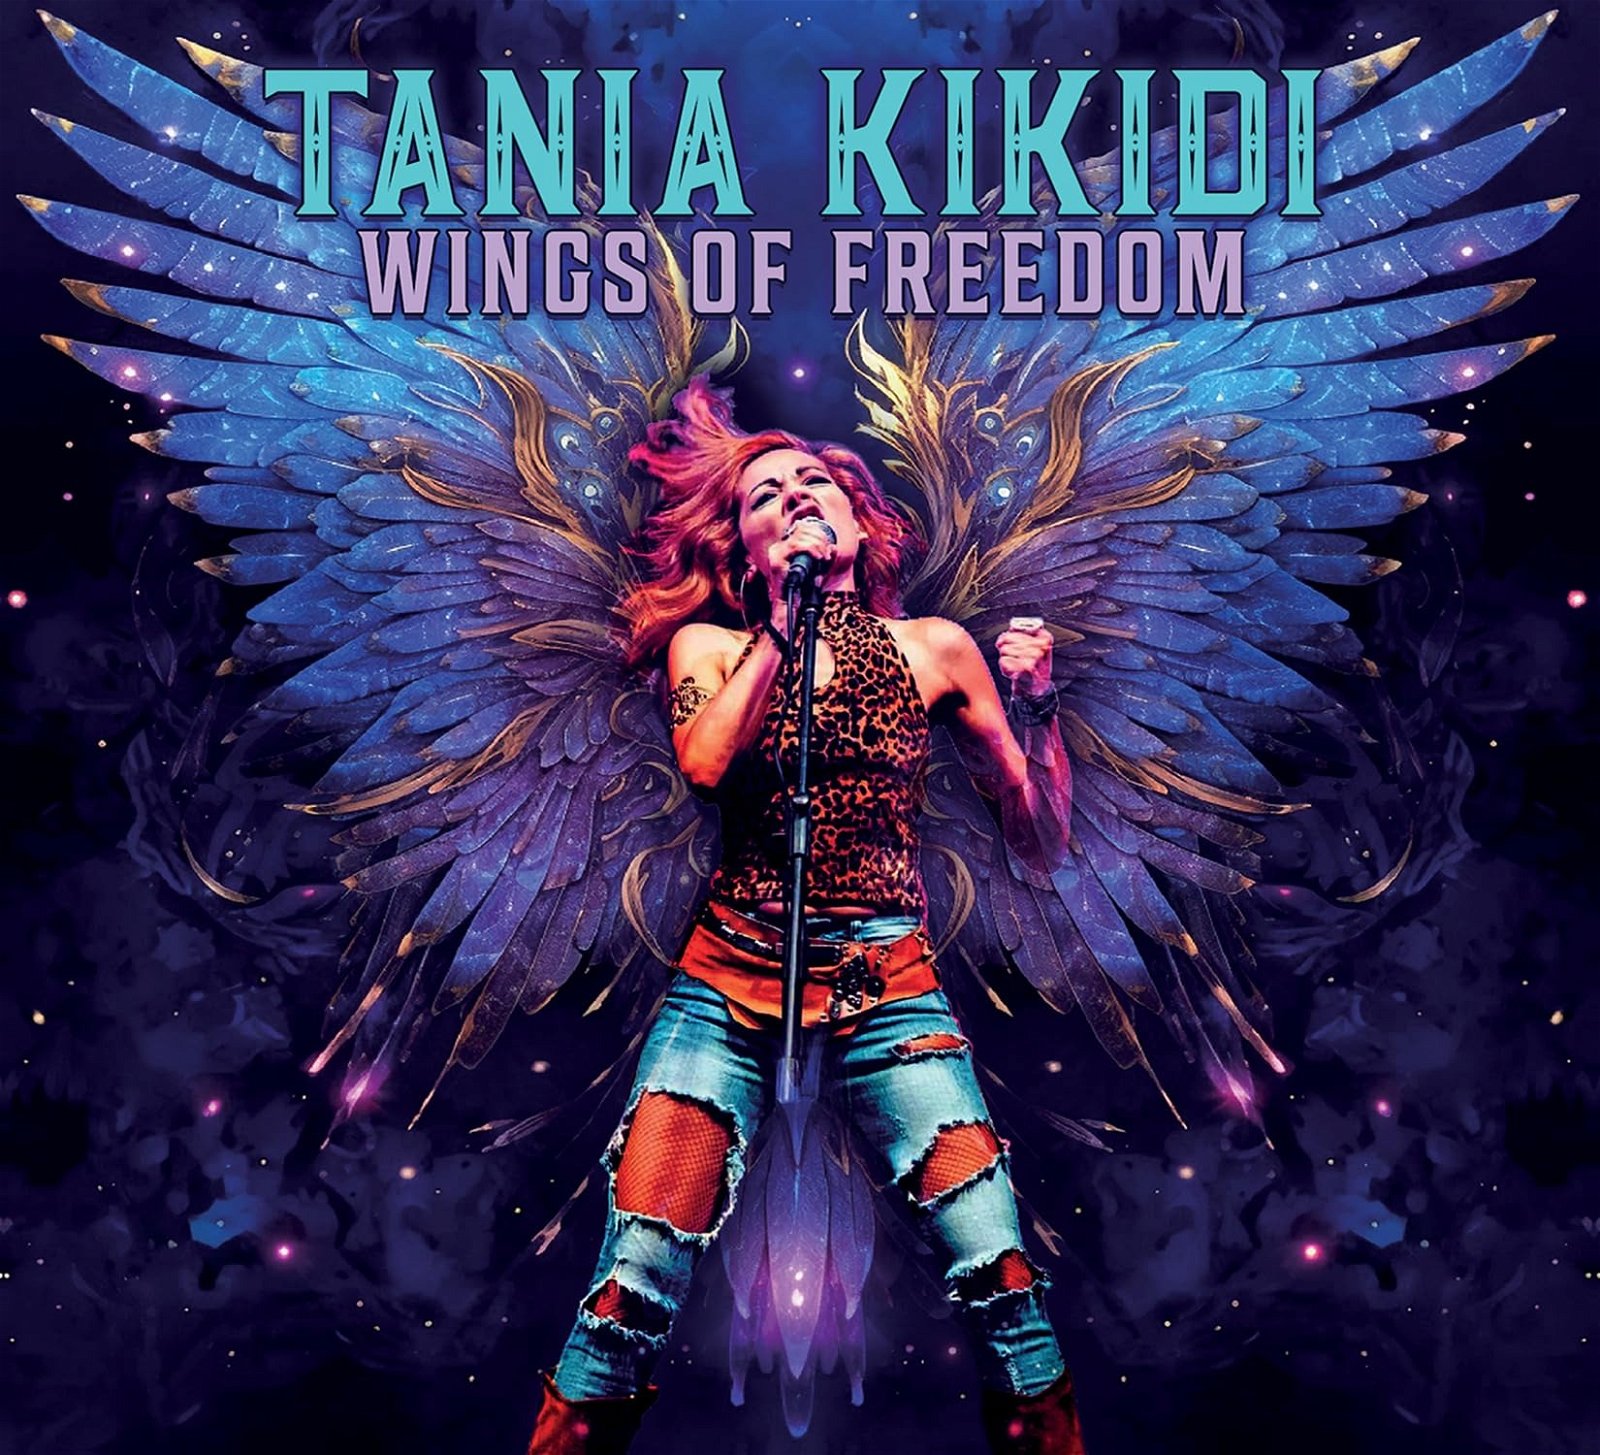 CD Shop - KIKIDI, TANIA WINGS OF FREEDOM